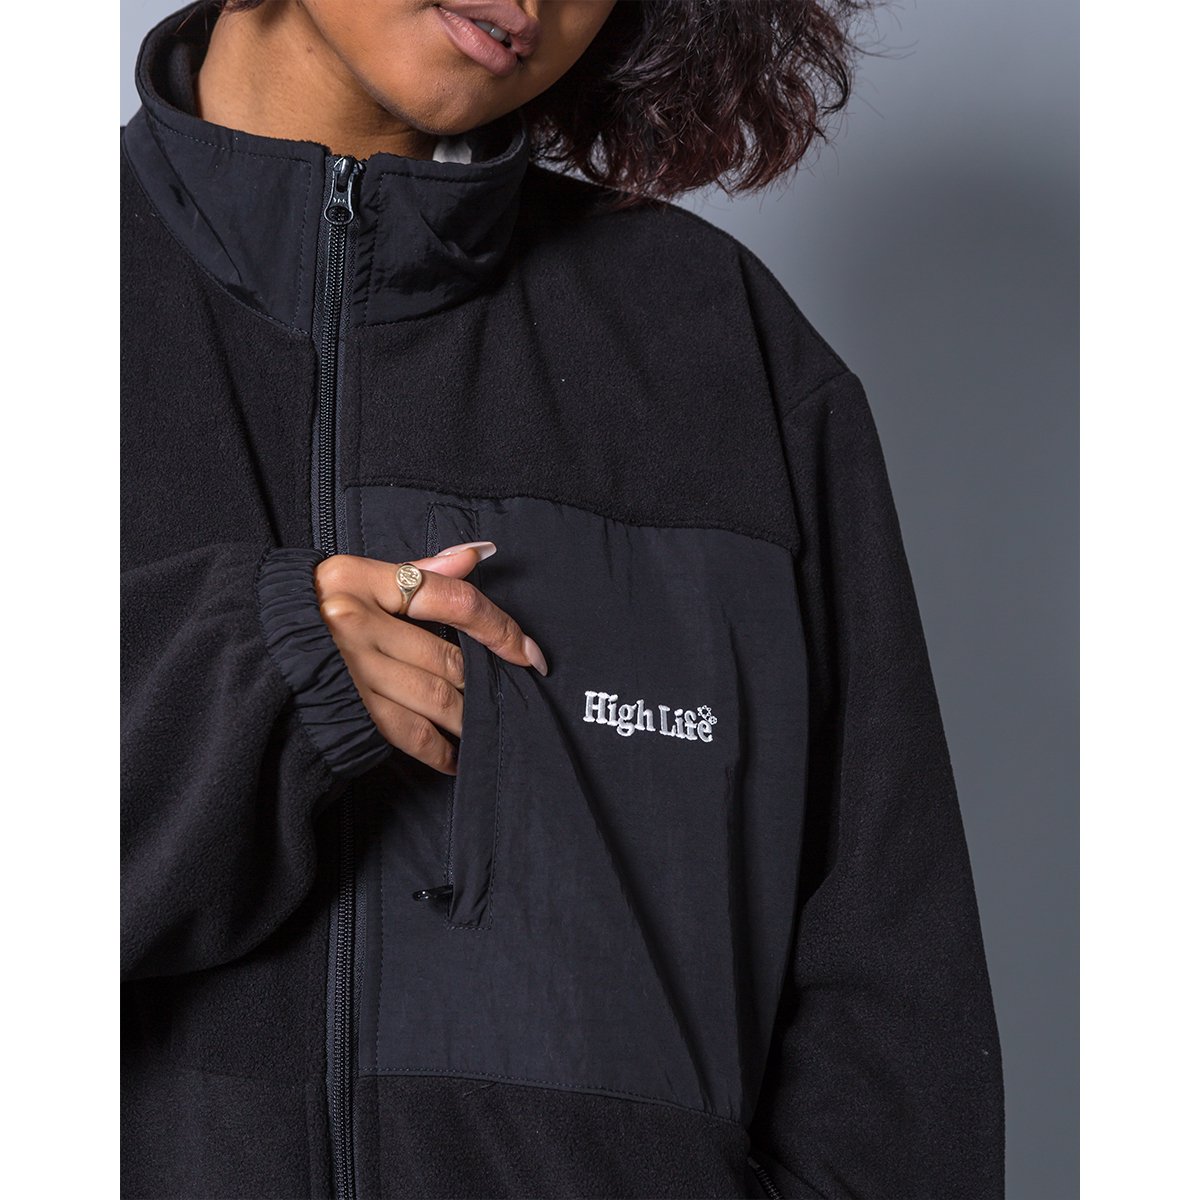 HighLife / Fleece ZipUp Jackets - Black - - HighLife Online Store |  ハイライフ公式オンラインストア